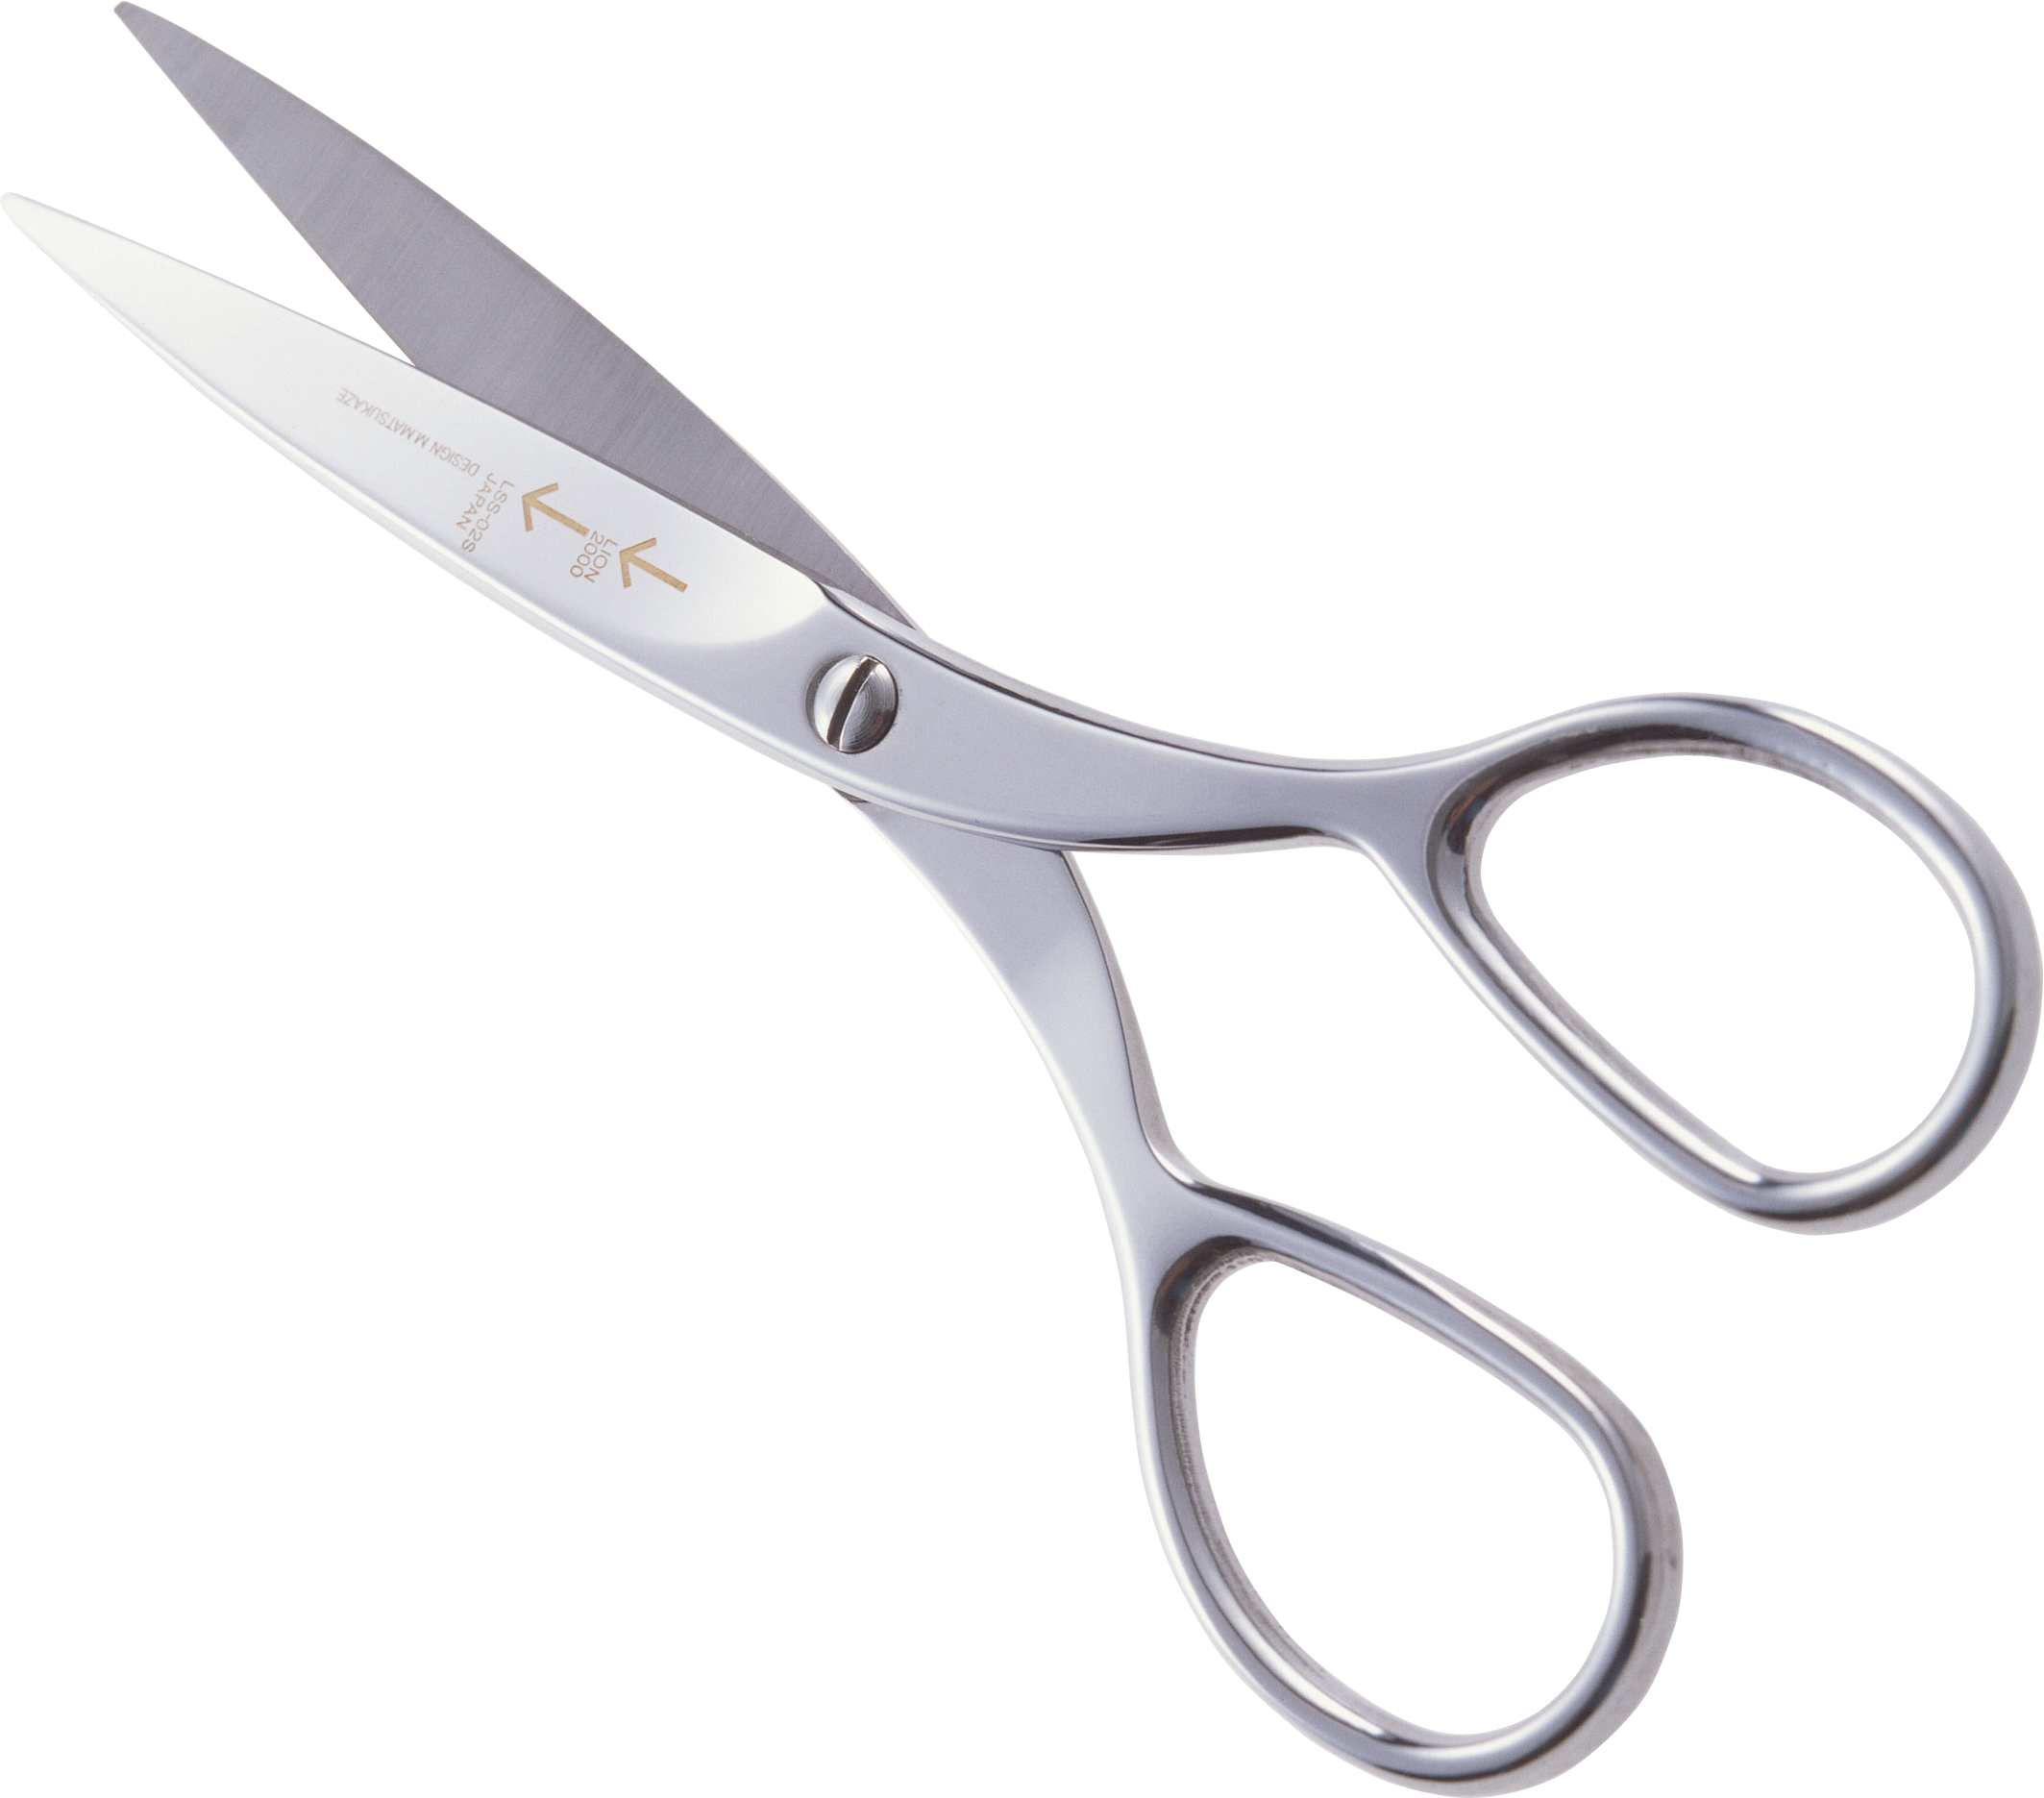 Hair Scissors Png Image - Scissors, Transparent background PNG HD thumbnail